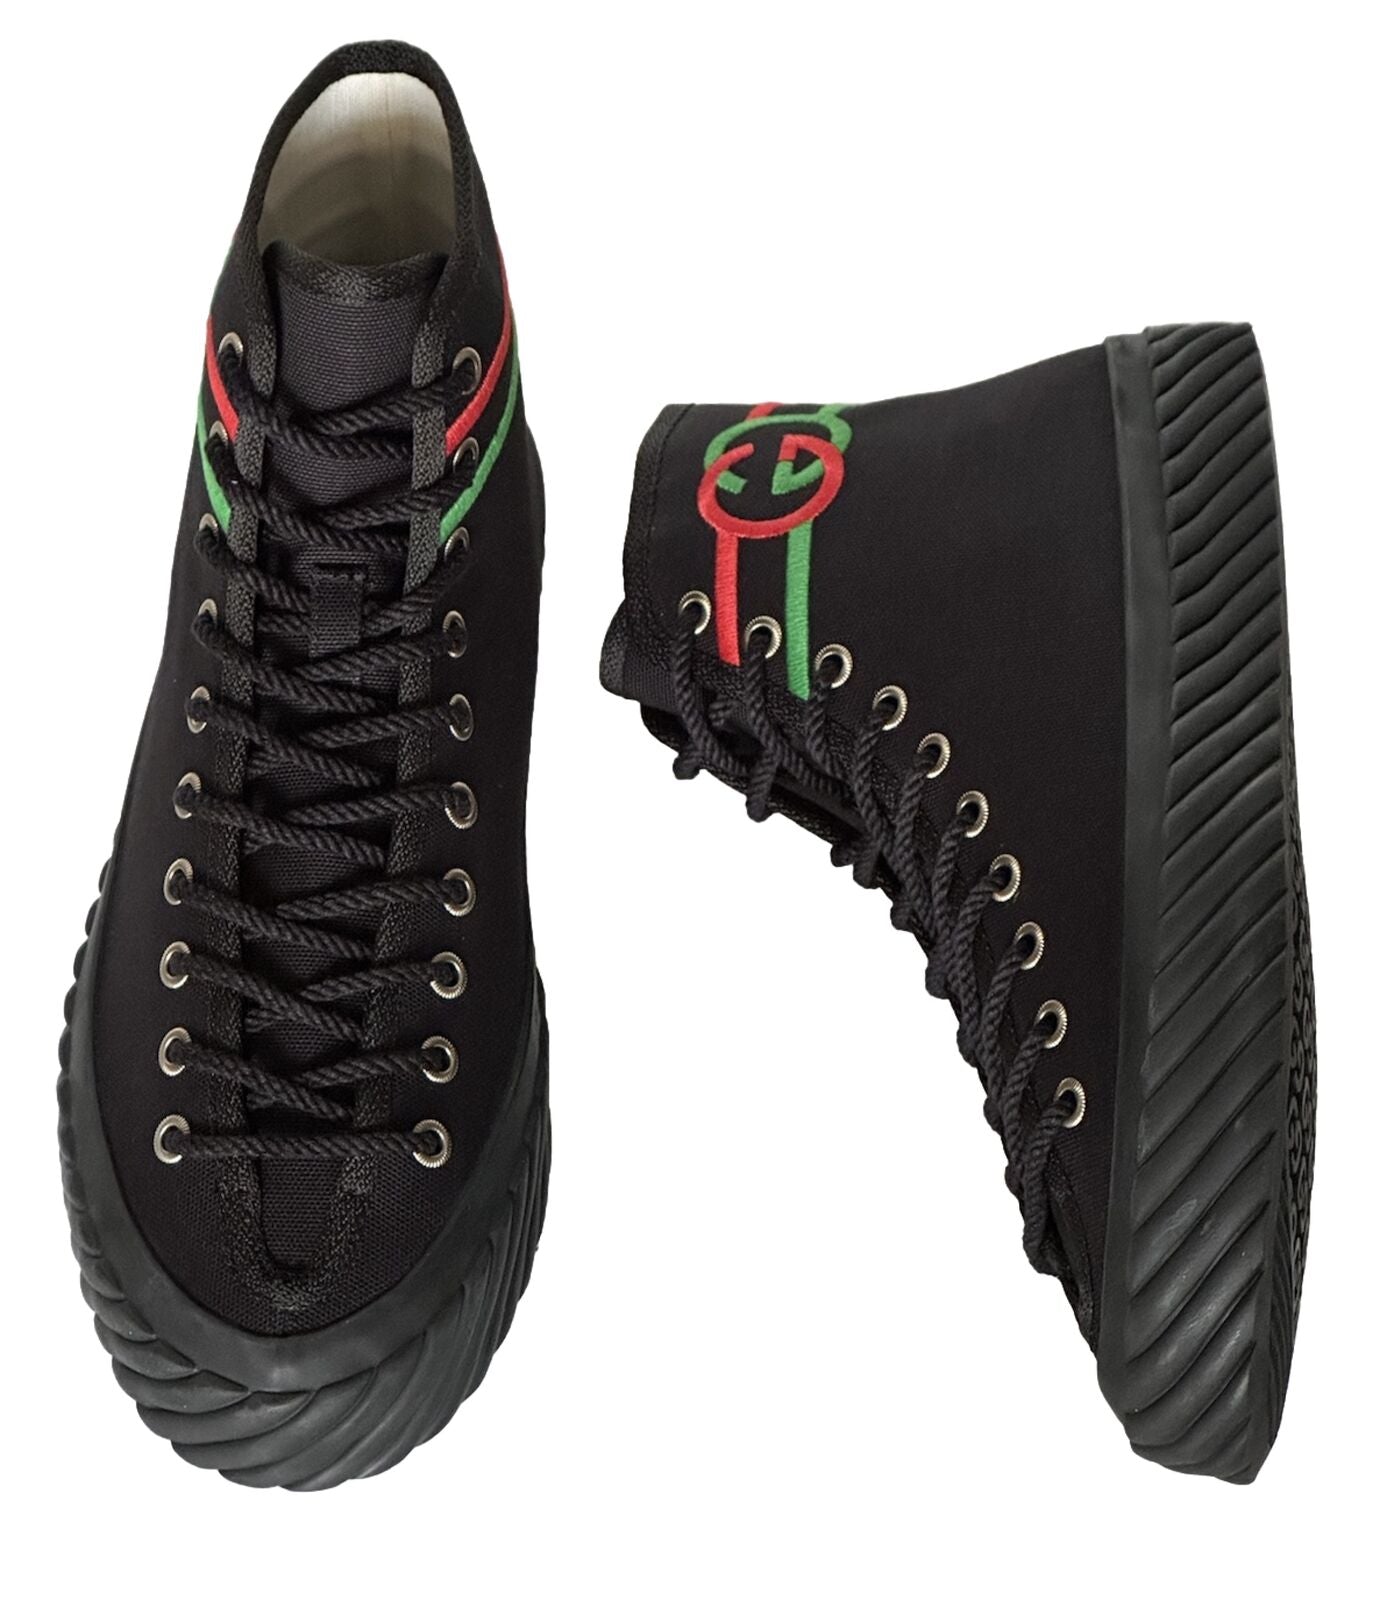 NIB Gucci Fabric Black High-top Sneakers 10.5 US (Gucci 9.5) 703033 Spain